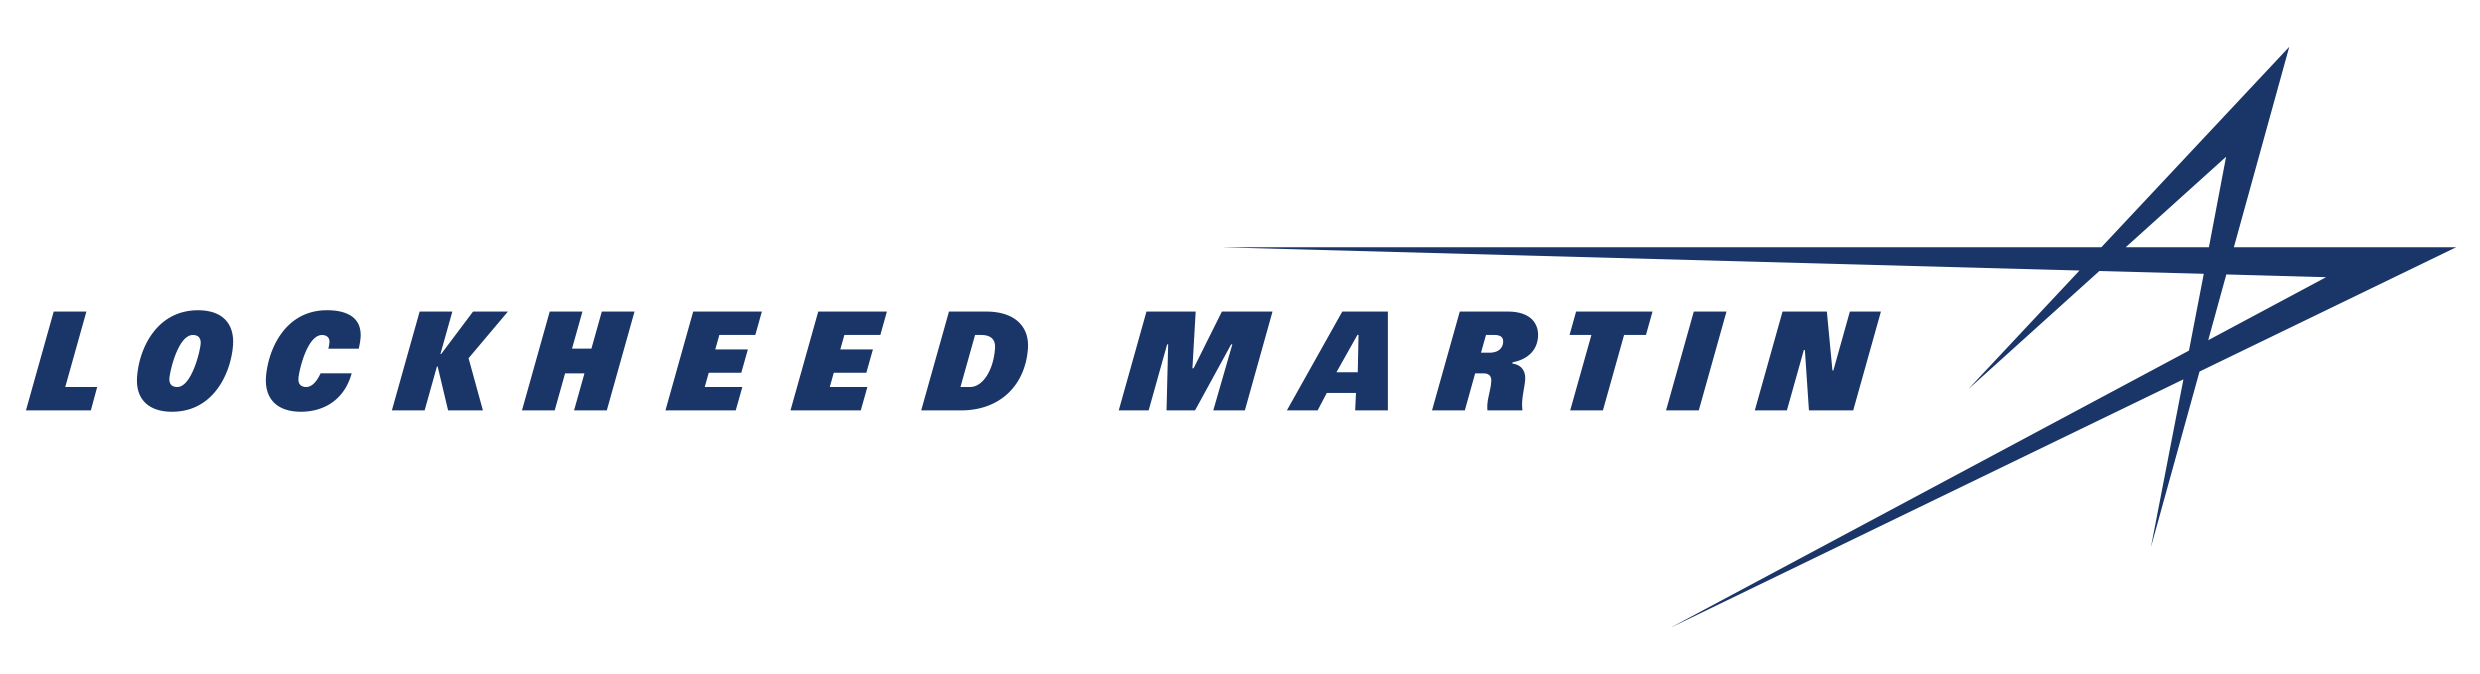 Northrop Logo - Lockheed Martin Corporation | Lockheed Martin